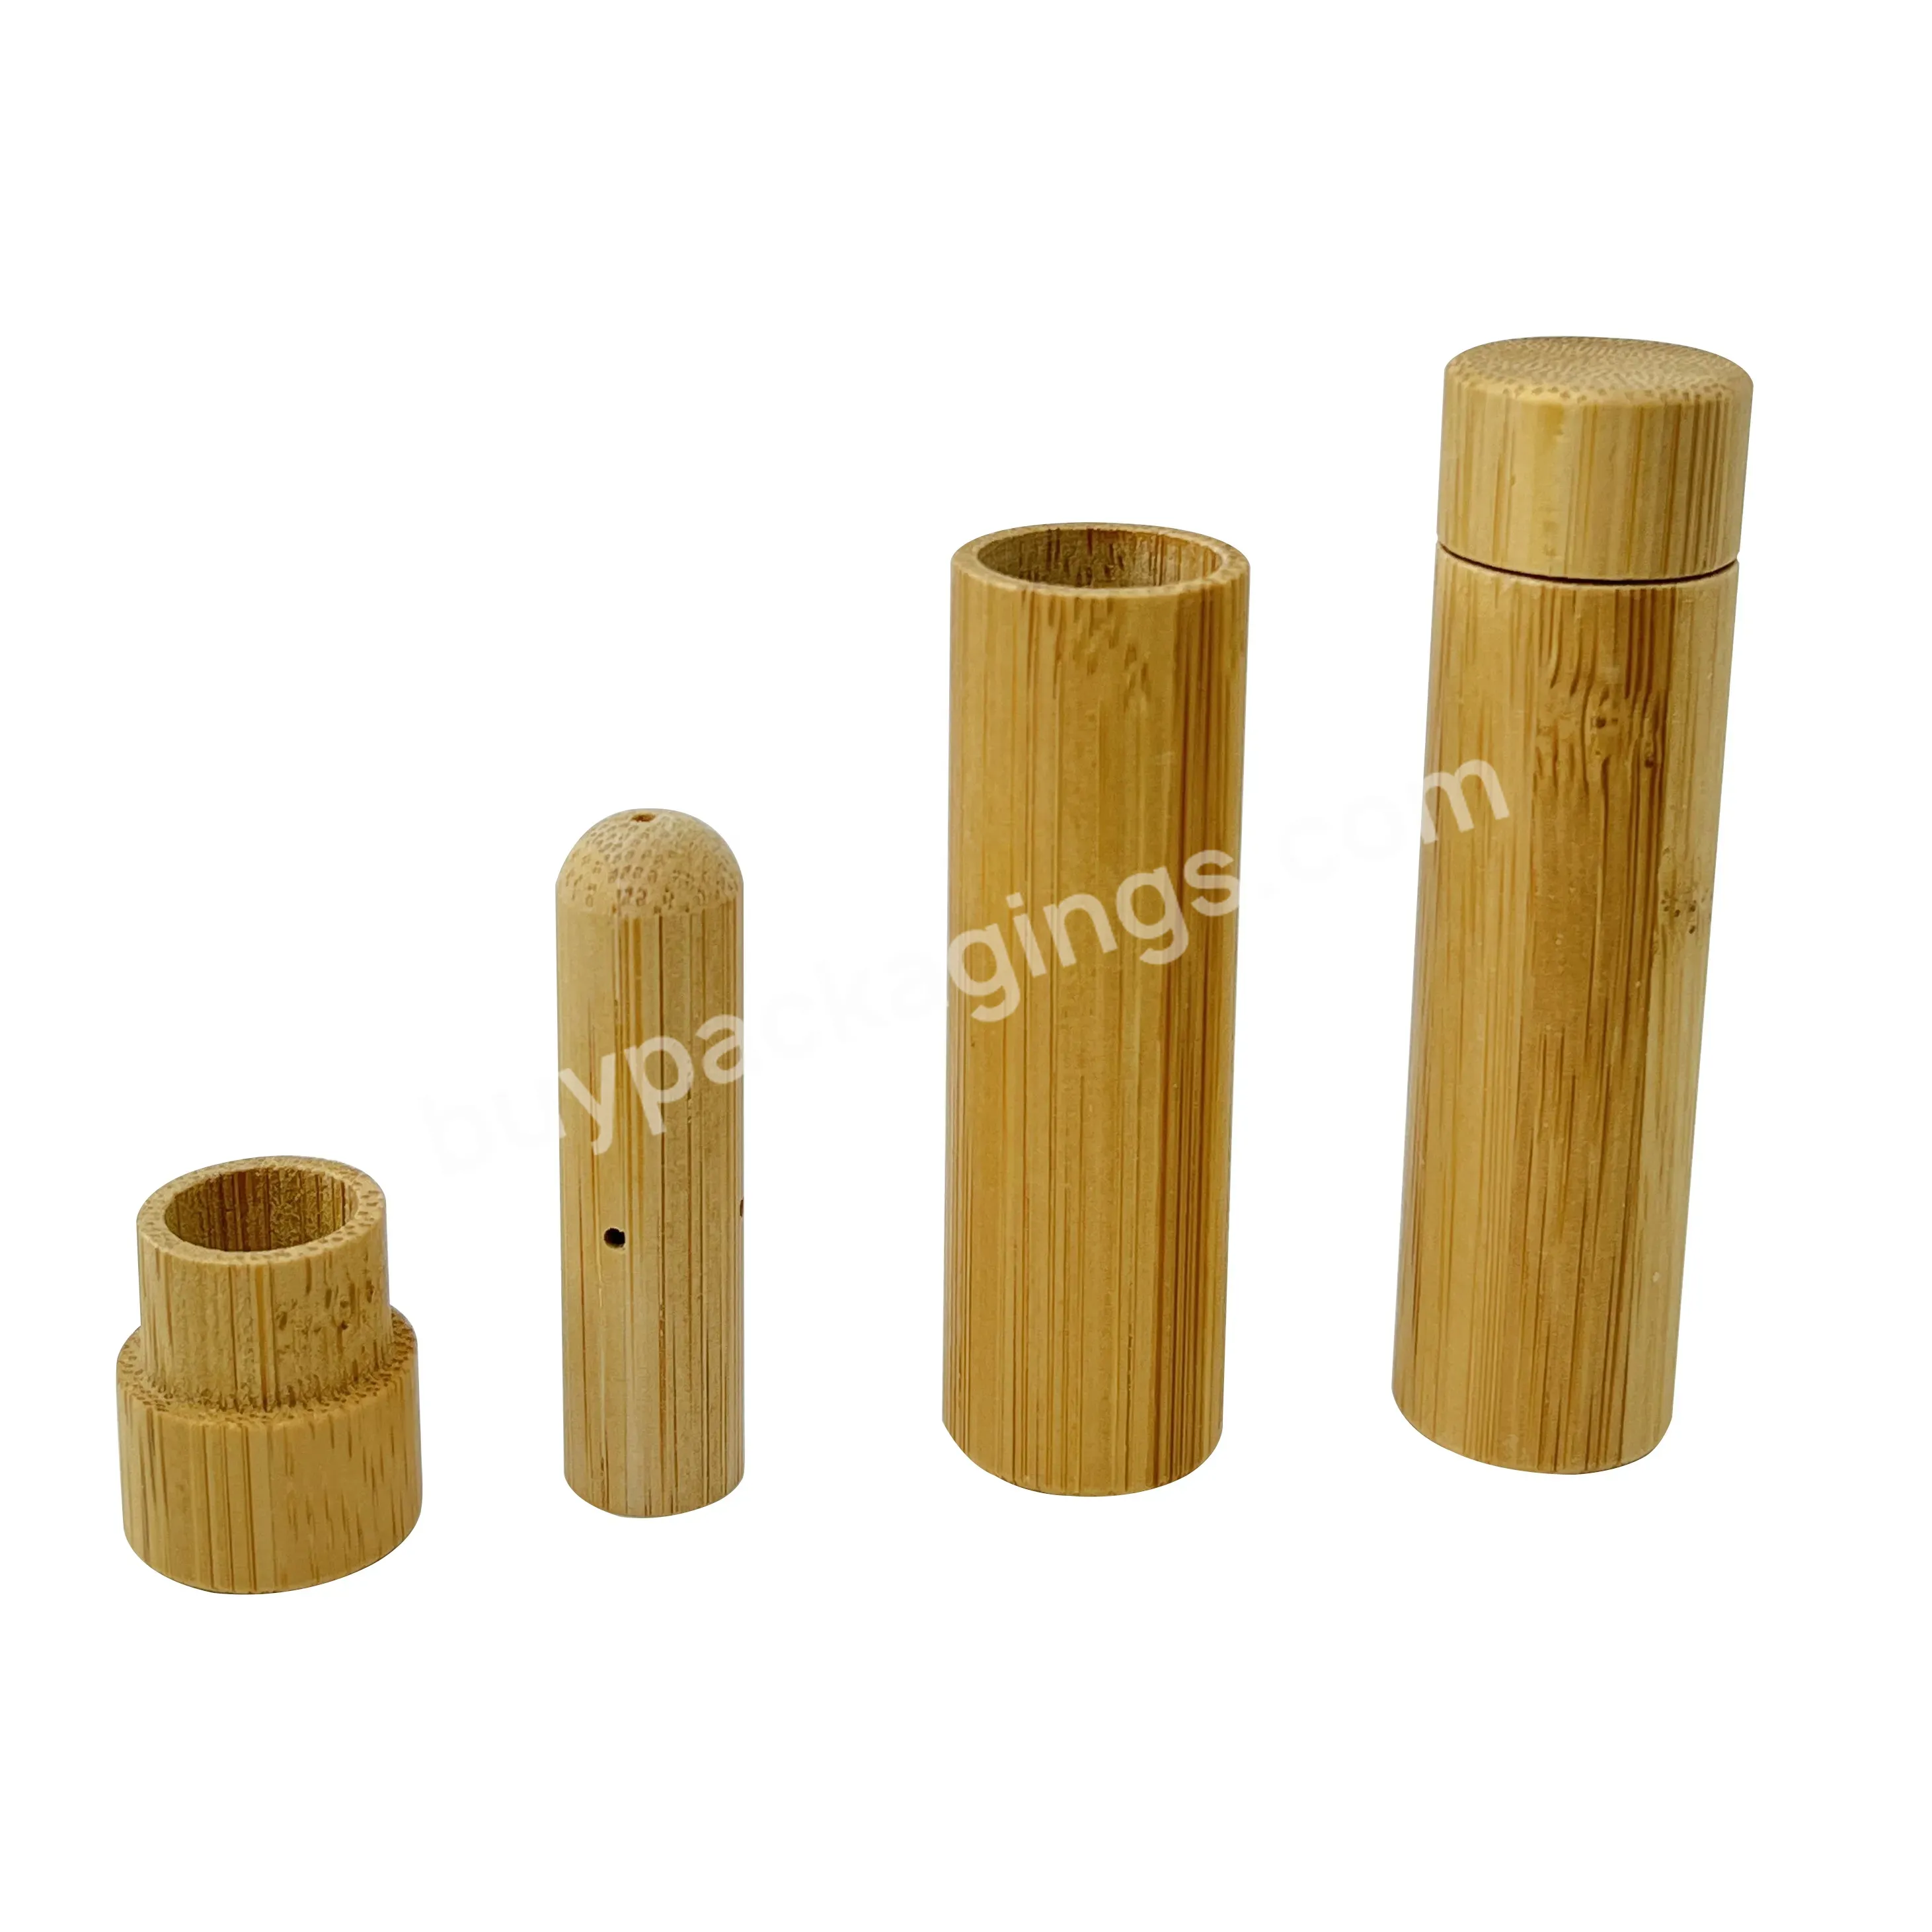 Bamboo And Wood Nose Tube Single Use Bamboo Essential Oil Nose Tube 3ml - Buy Bamboo And Wood Nasal Tube,Bamboo Material,Essential Oil Nasal Duct.